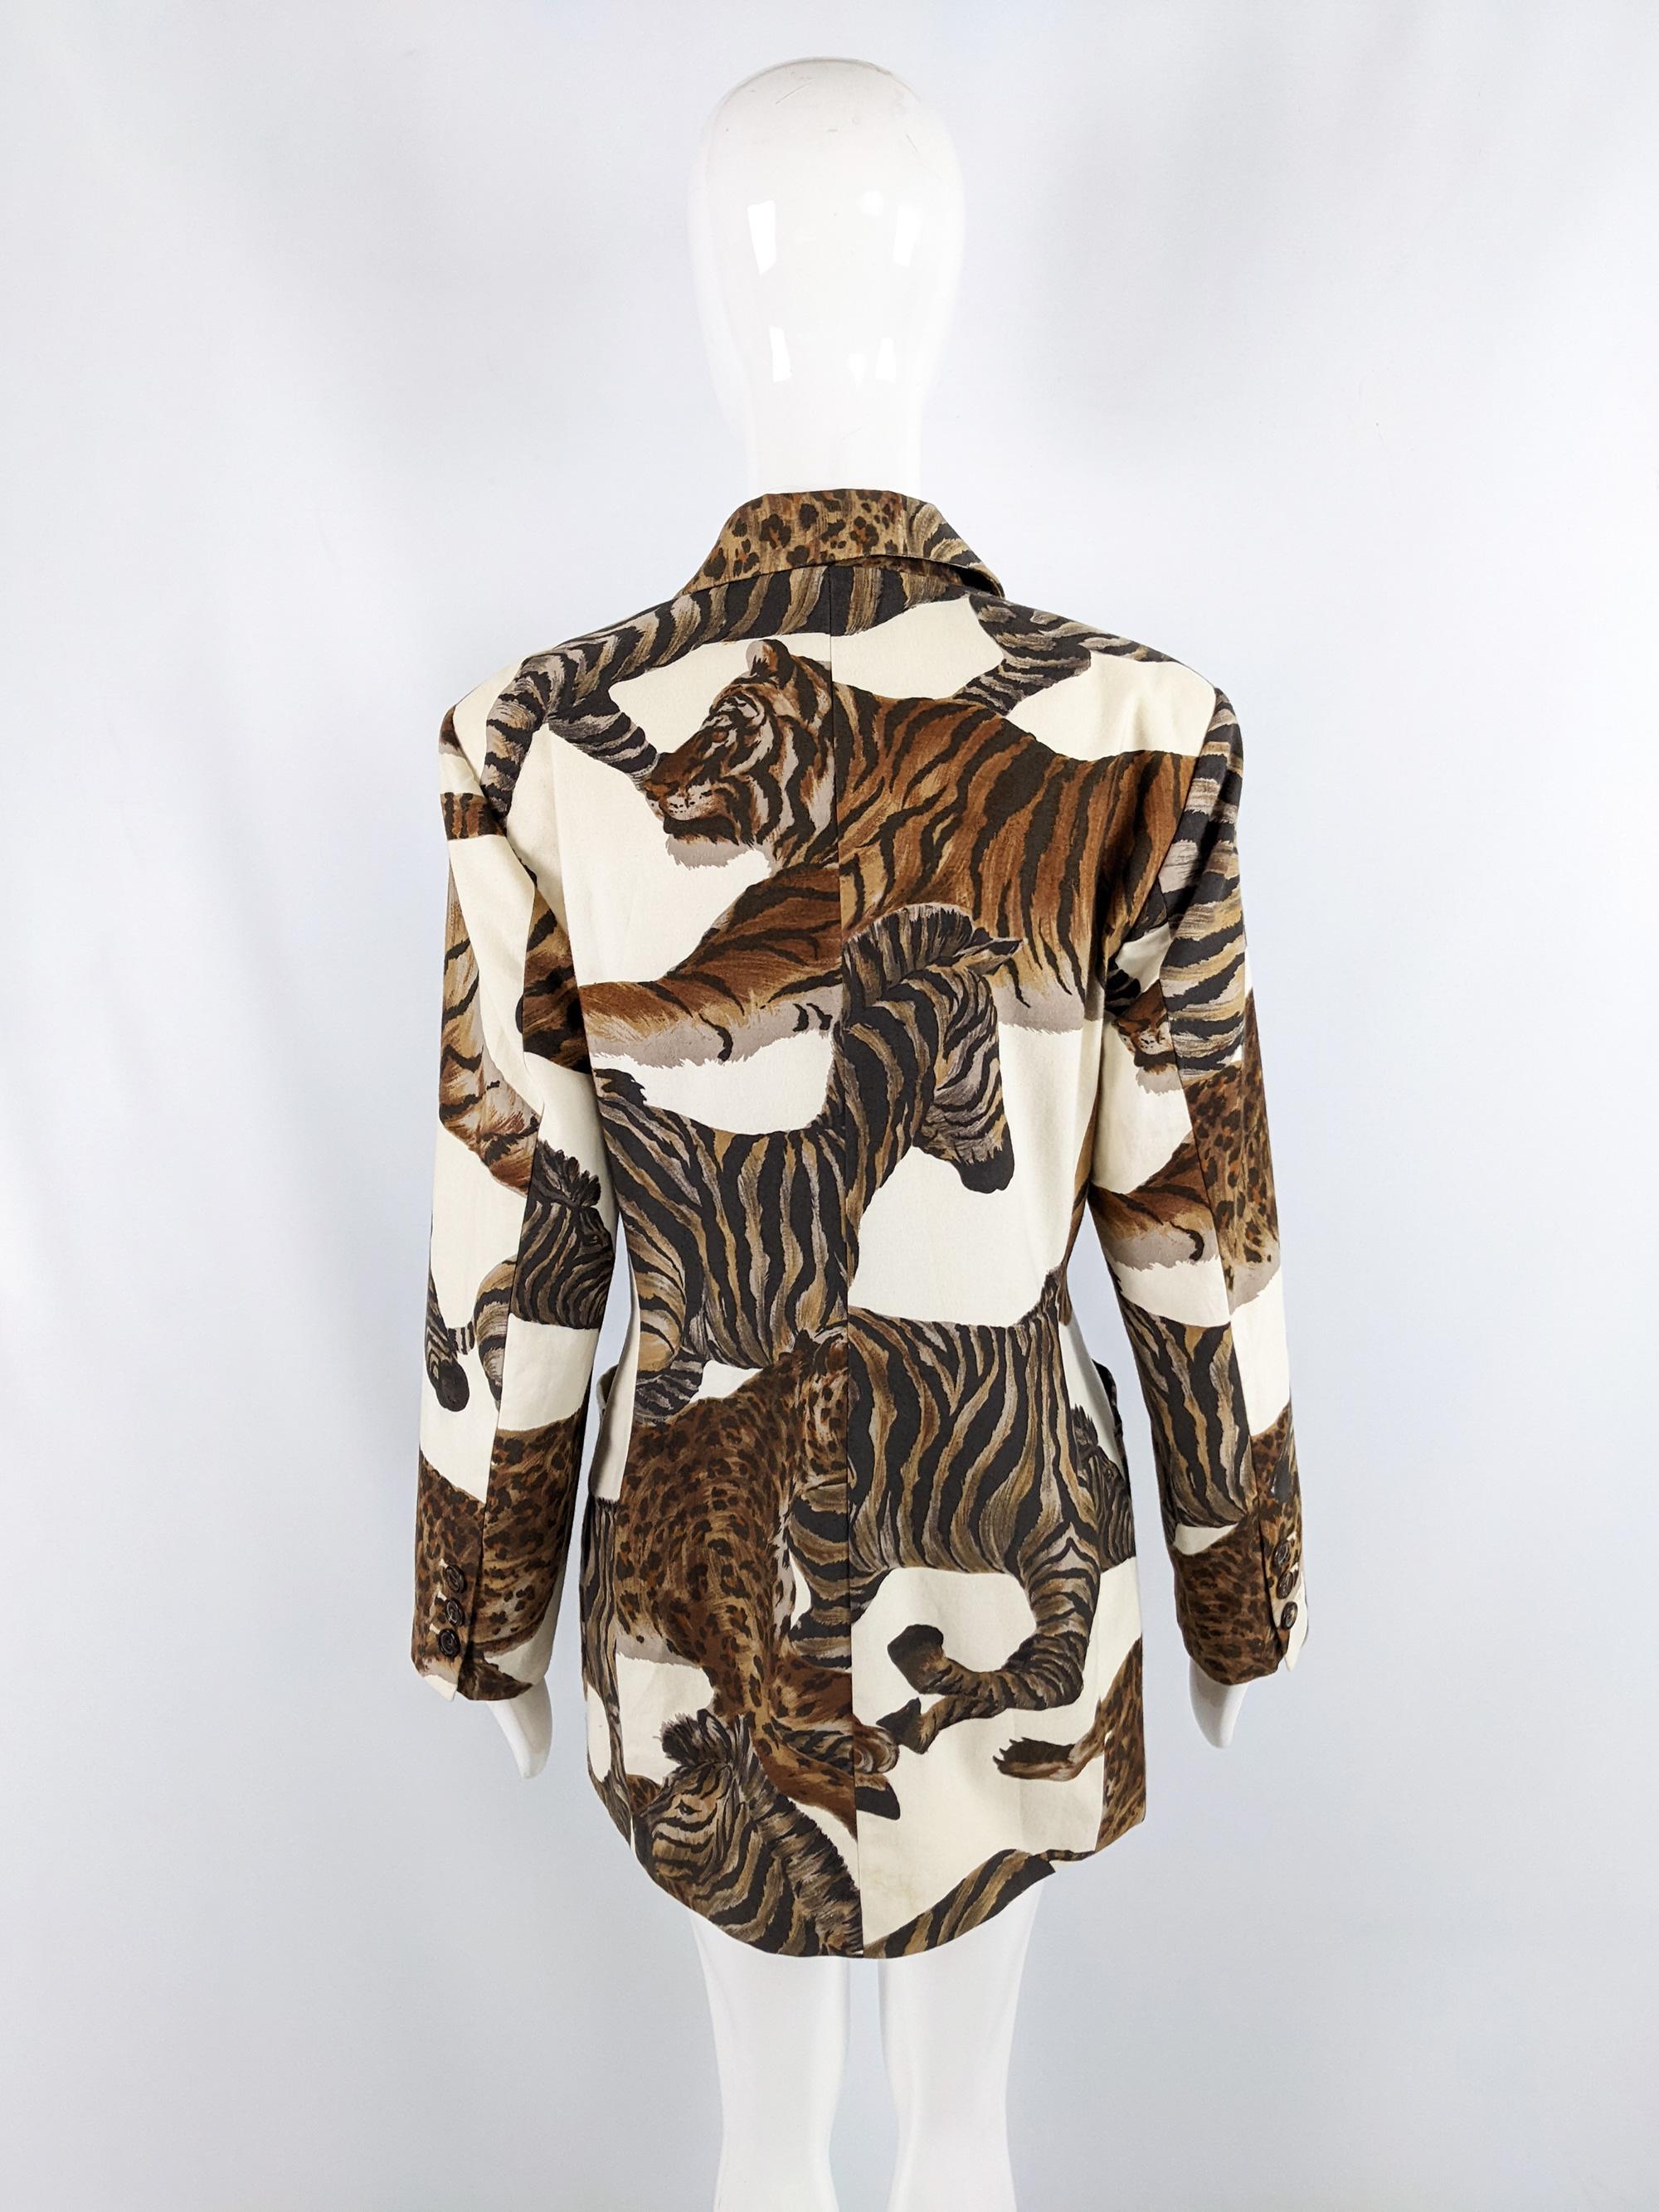 CRISCA by ESCADA Blazer Jacket Women Animal Print Shoulder Pads Tiger Zebra Pattern EU 40 Uk 12 Us 8